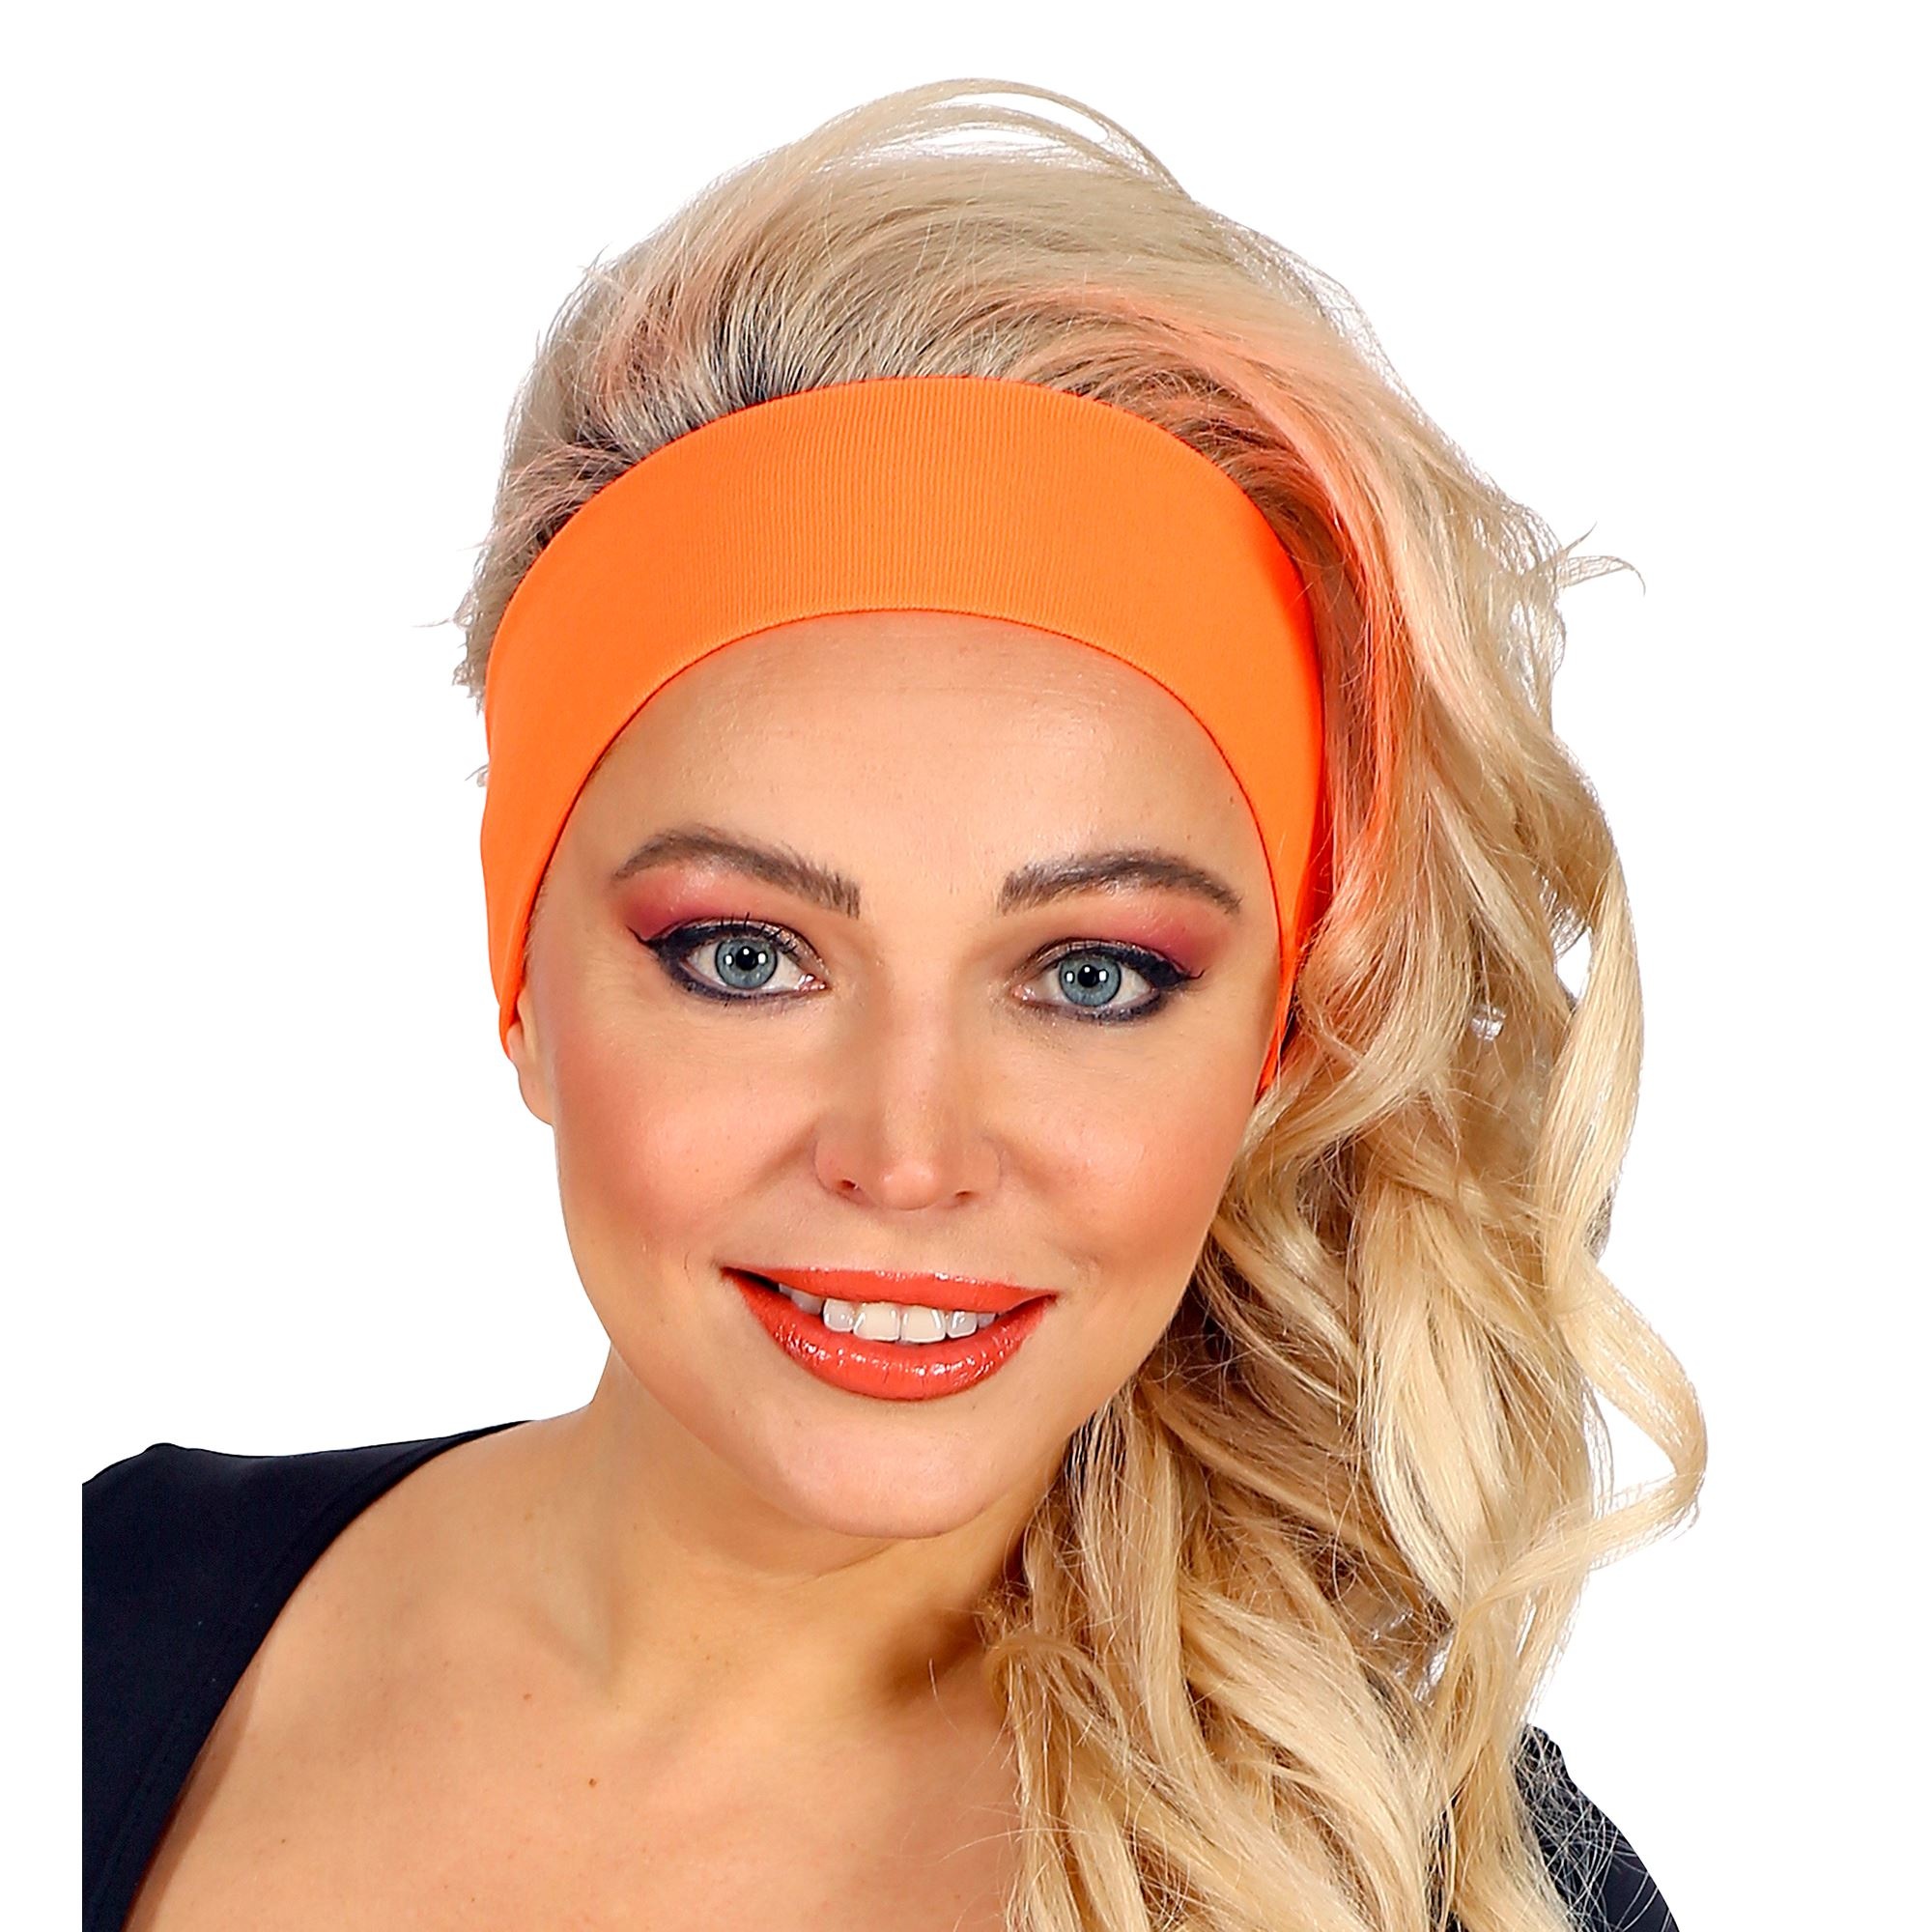 Neon oranje hoofdband